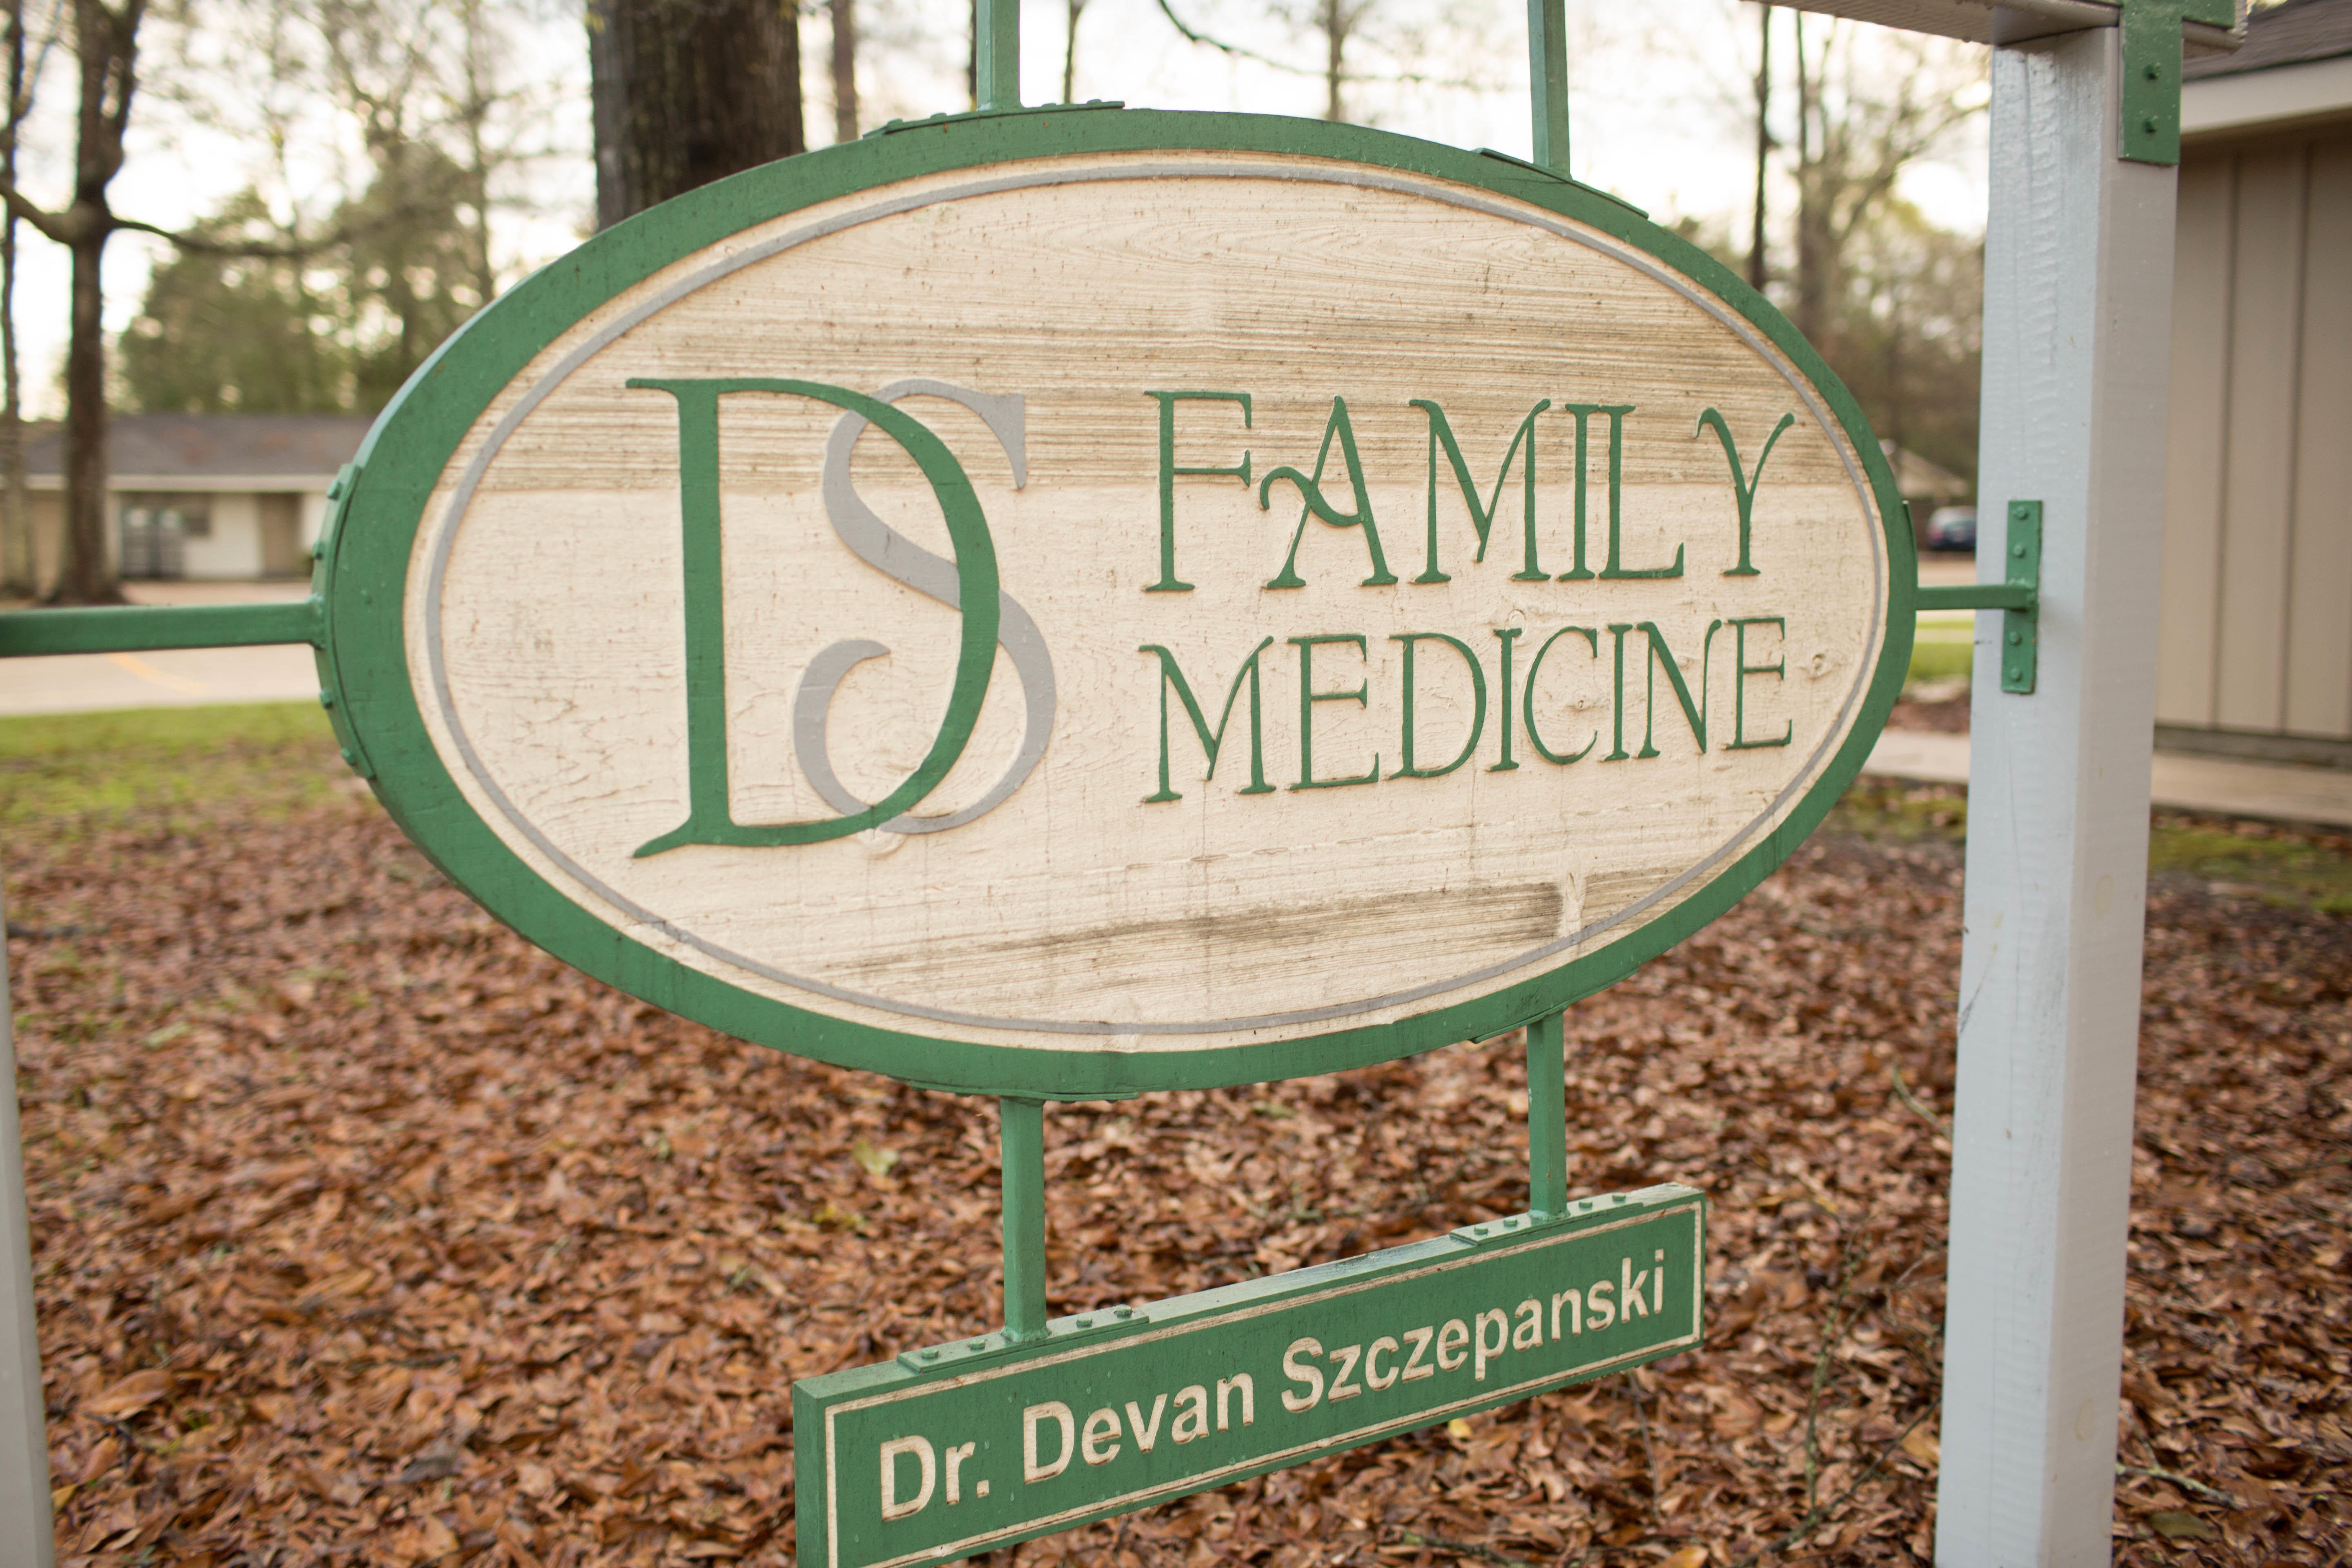 DS Family Medicine Photo